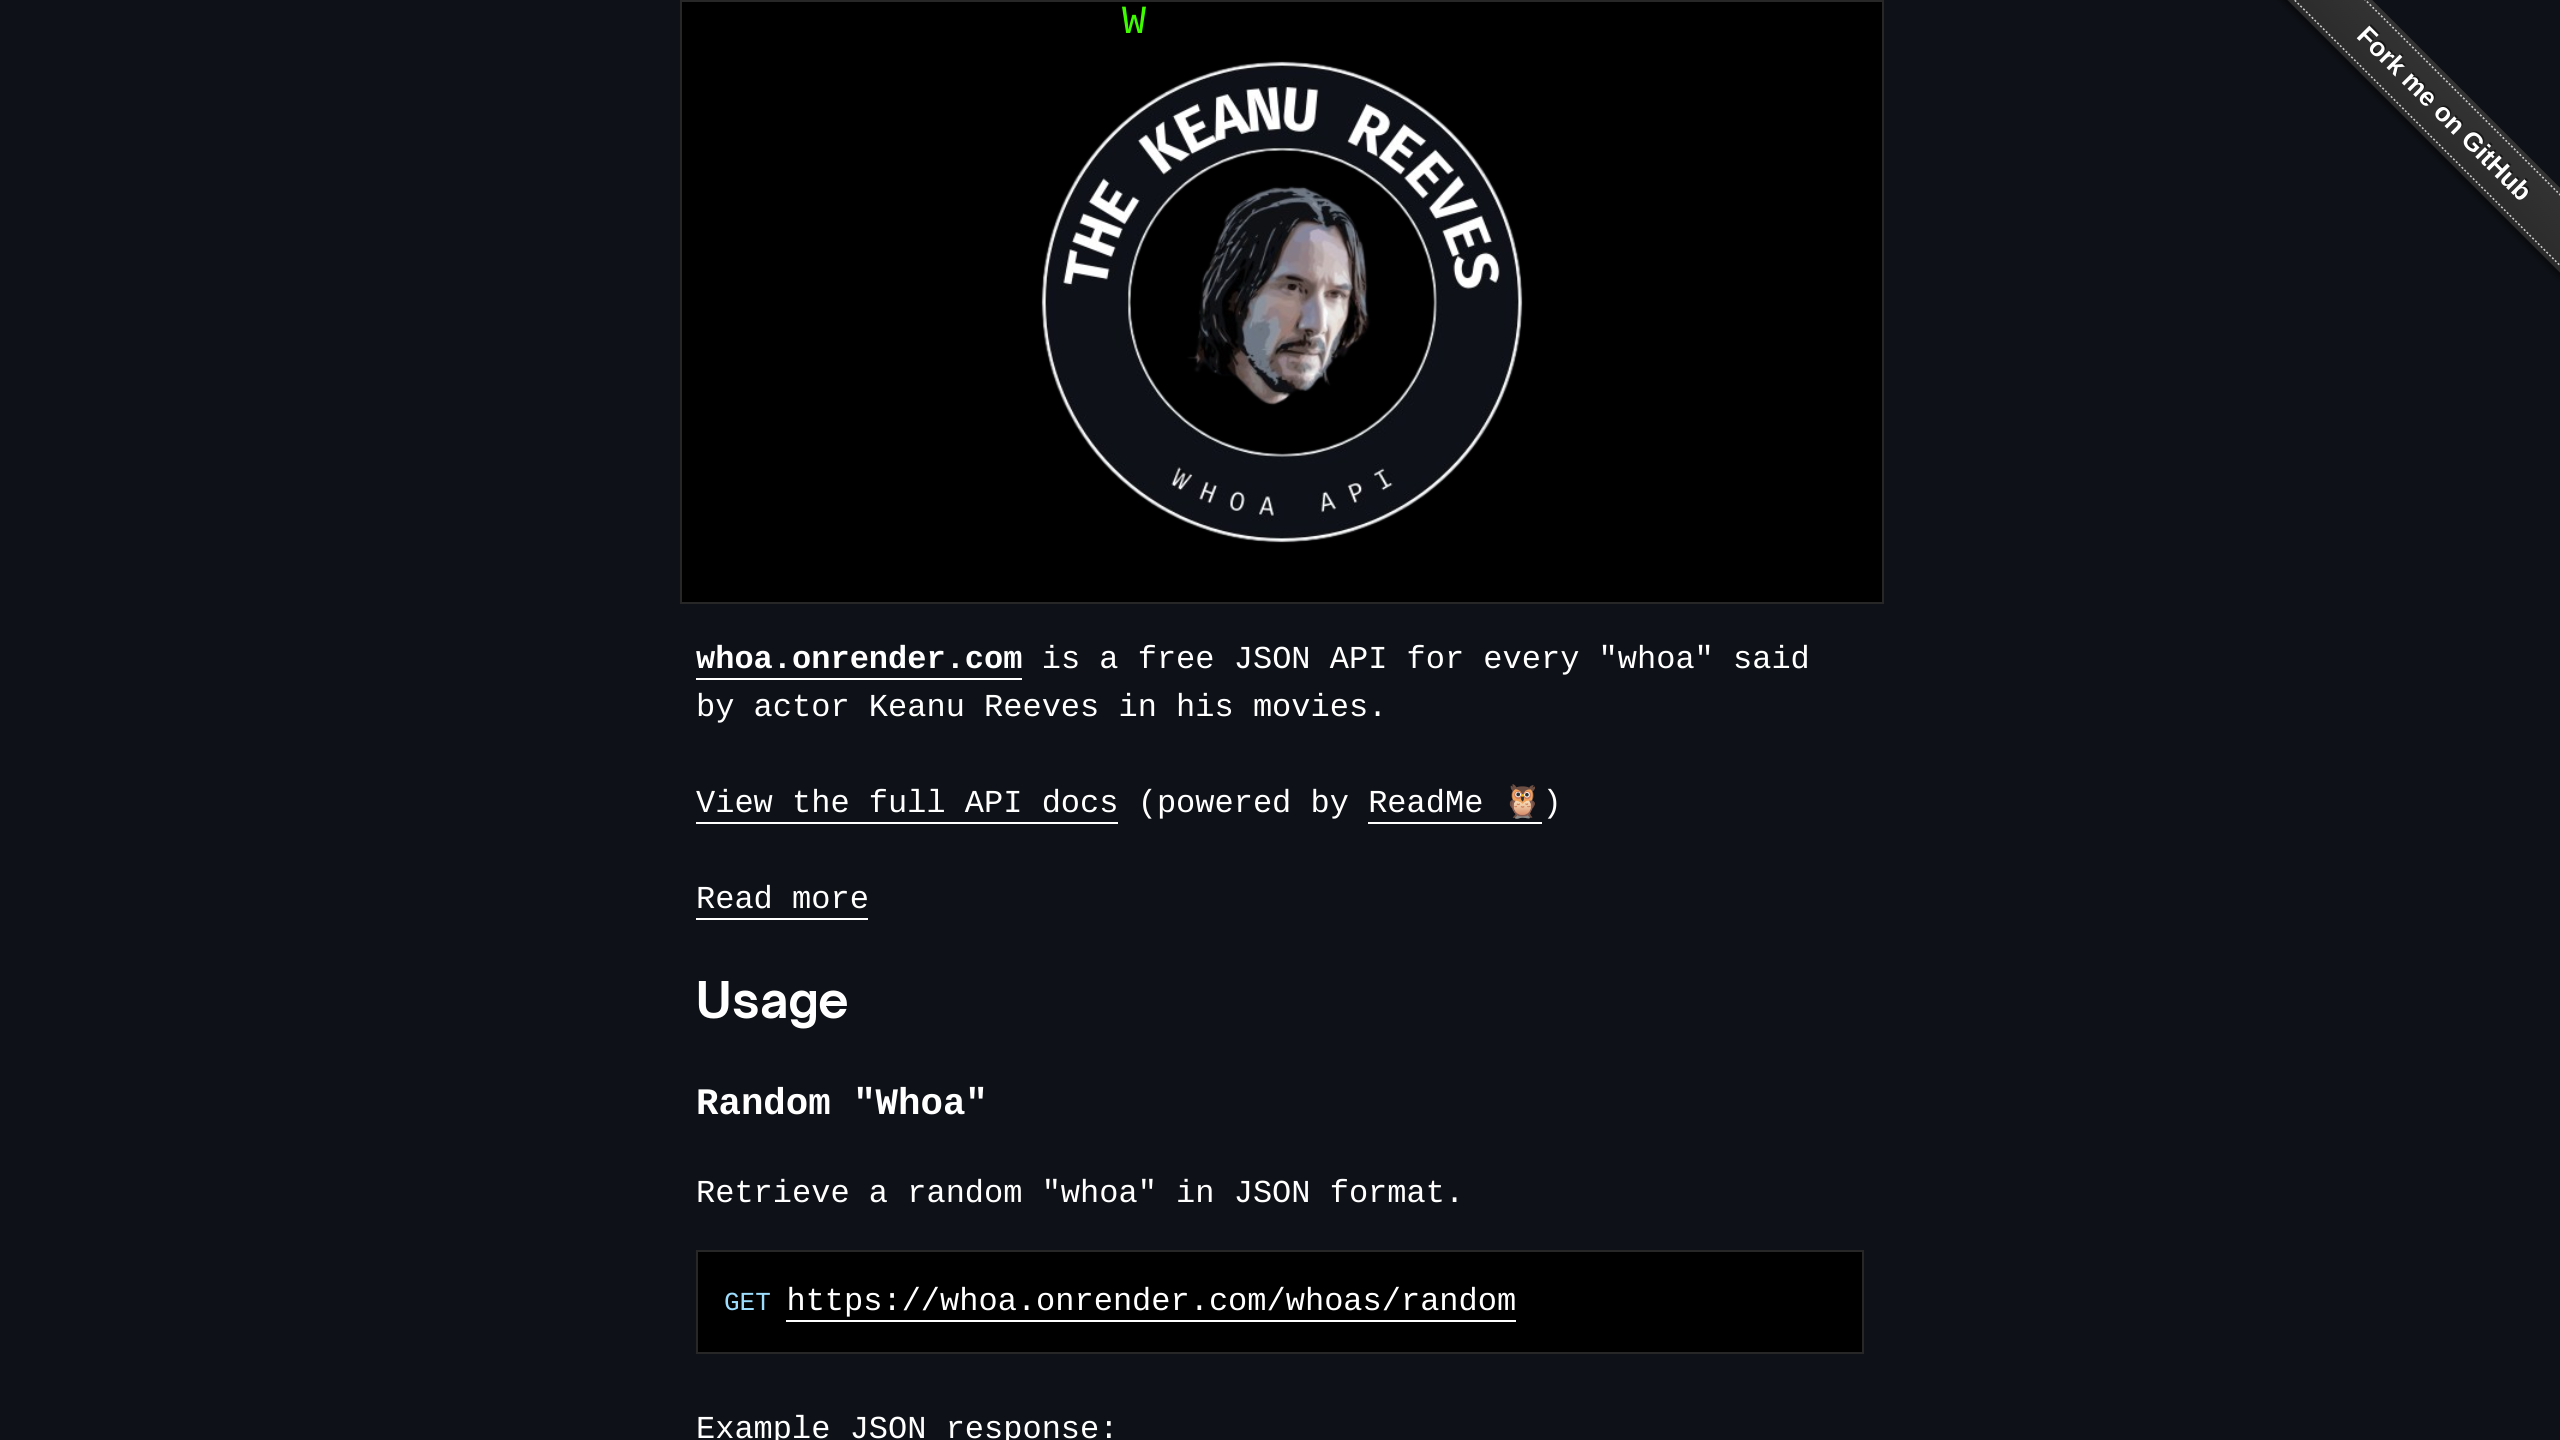 Keanu Reeves Whoa's website screenshot